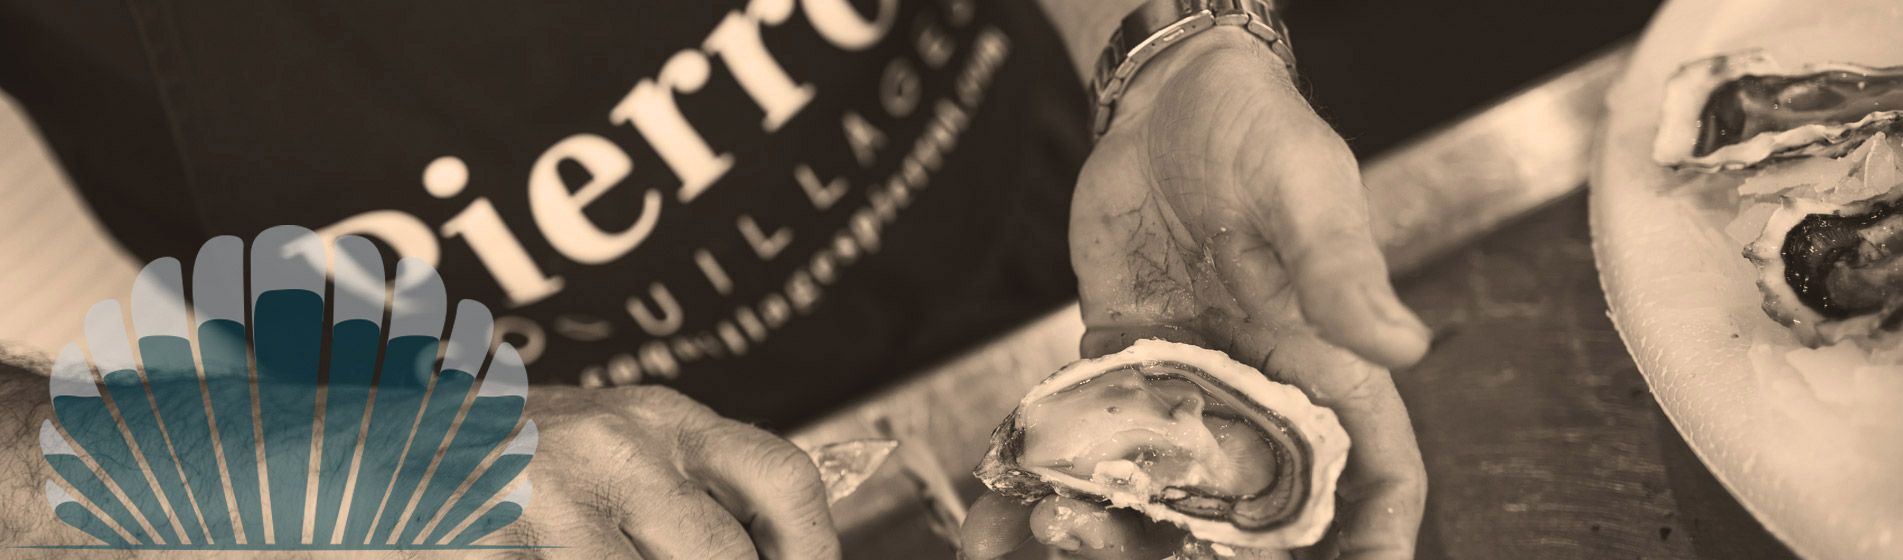 Degustation huitre isigny sur mer